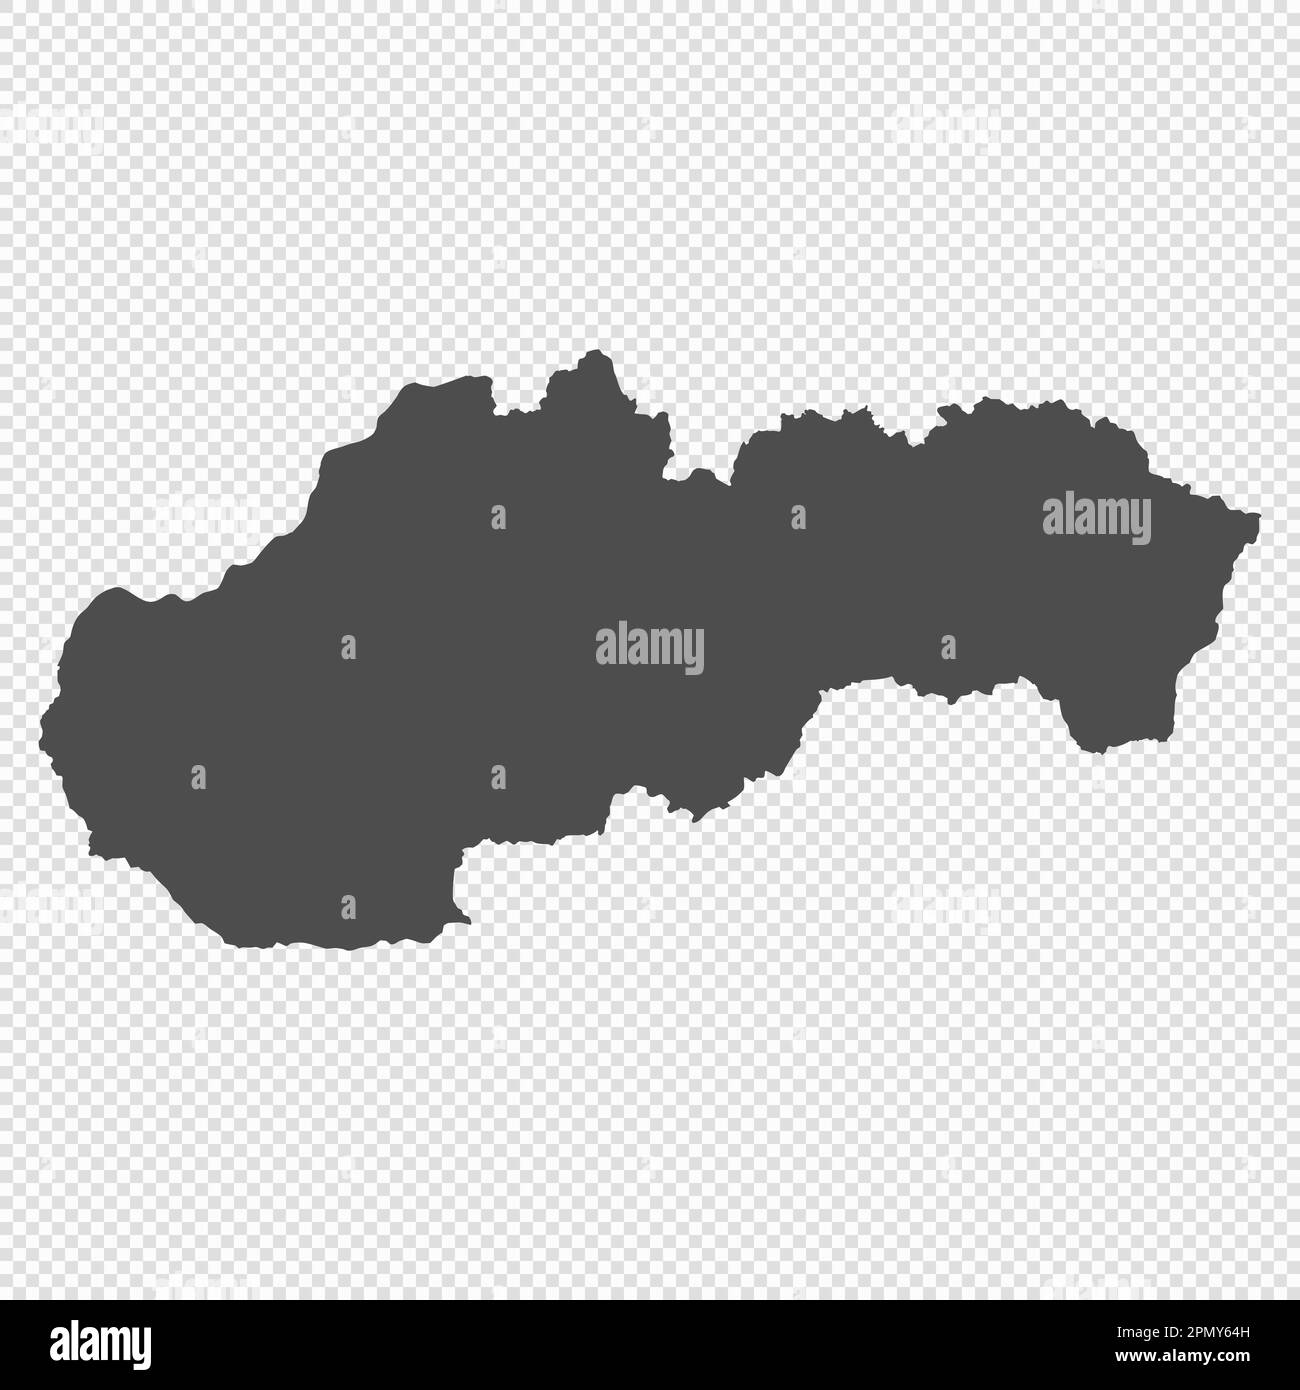 High detailed isolated map - Slovakia Stock Vector